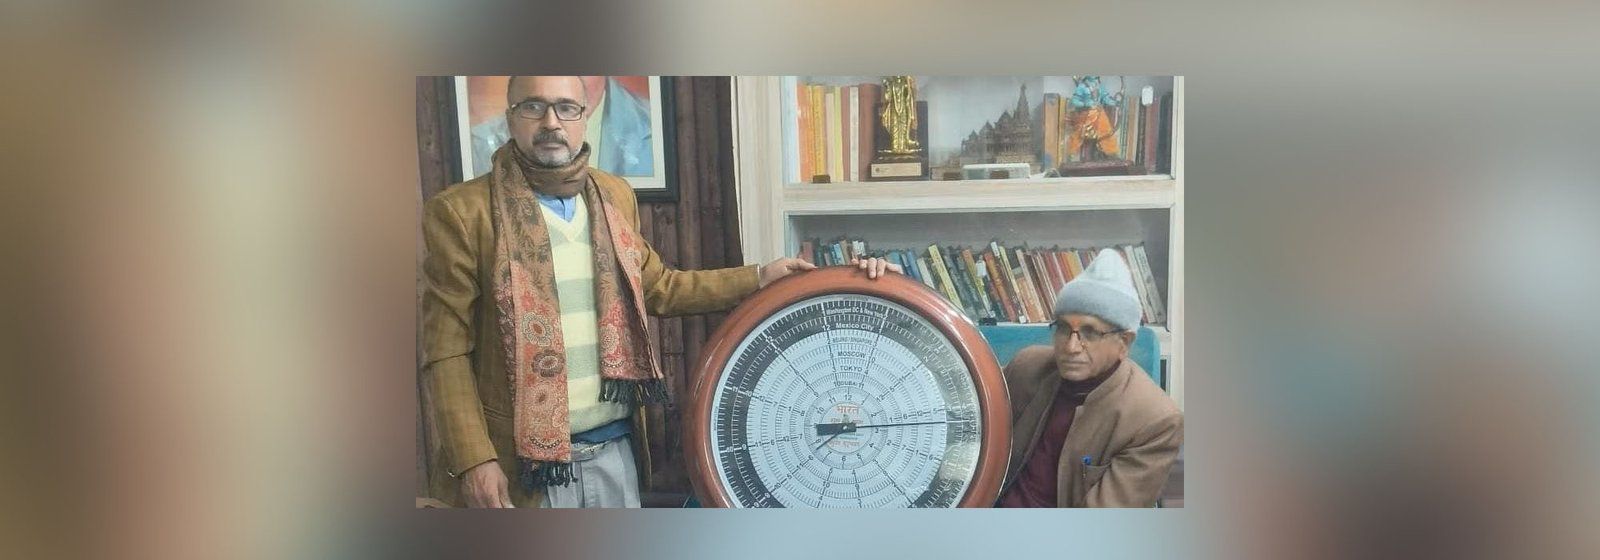 Lucknow Vegetable Vendor's Novel World Clock Gifted to Ram Mandir Trust